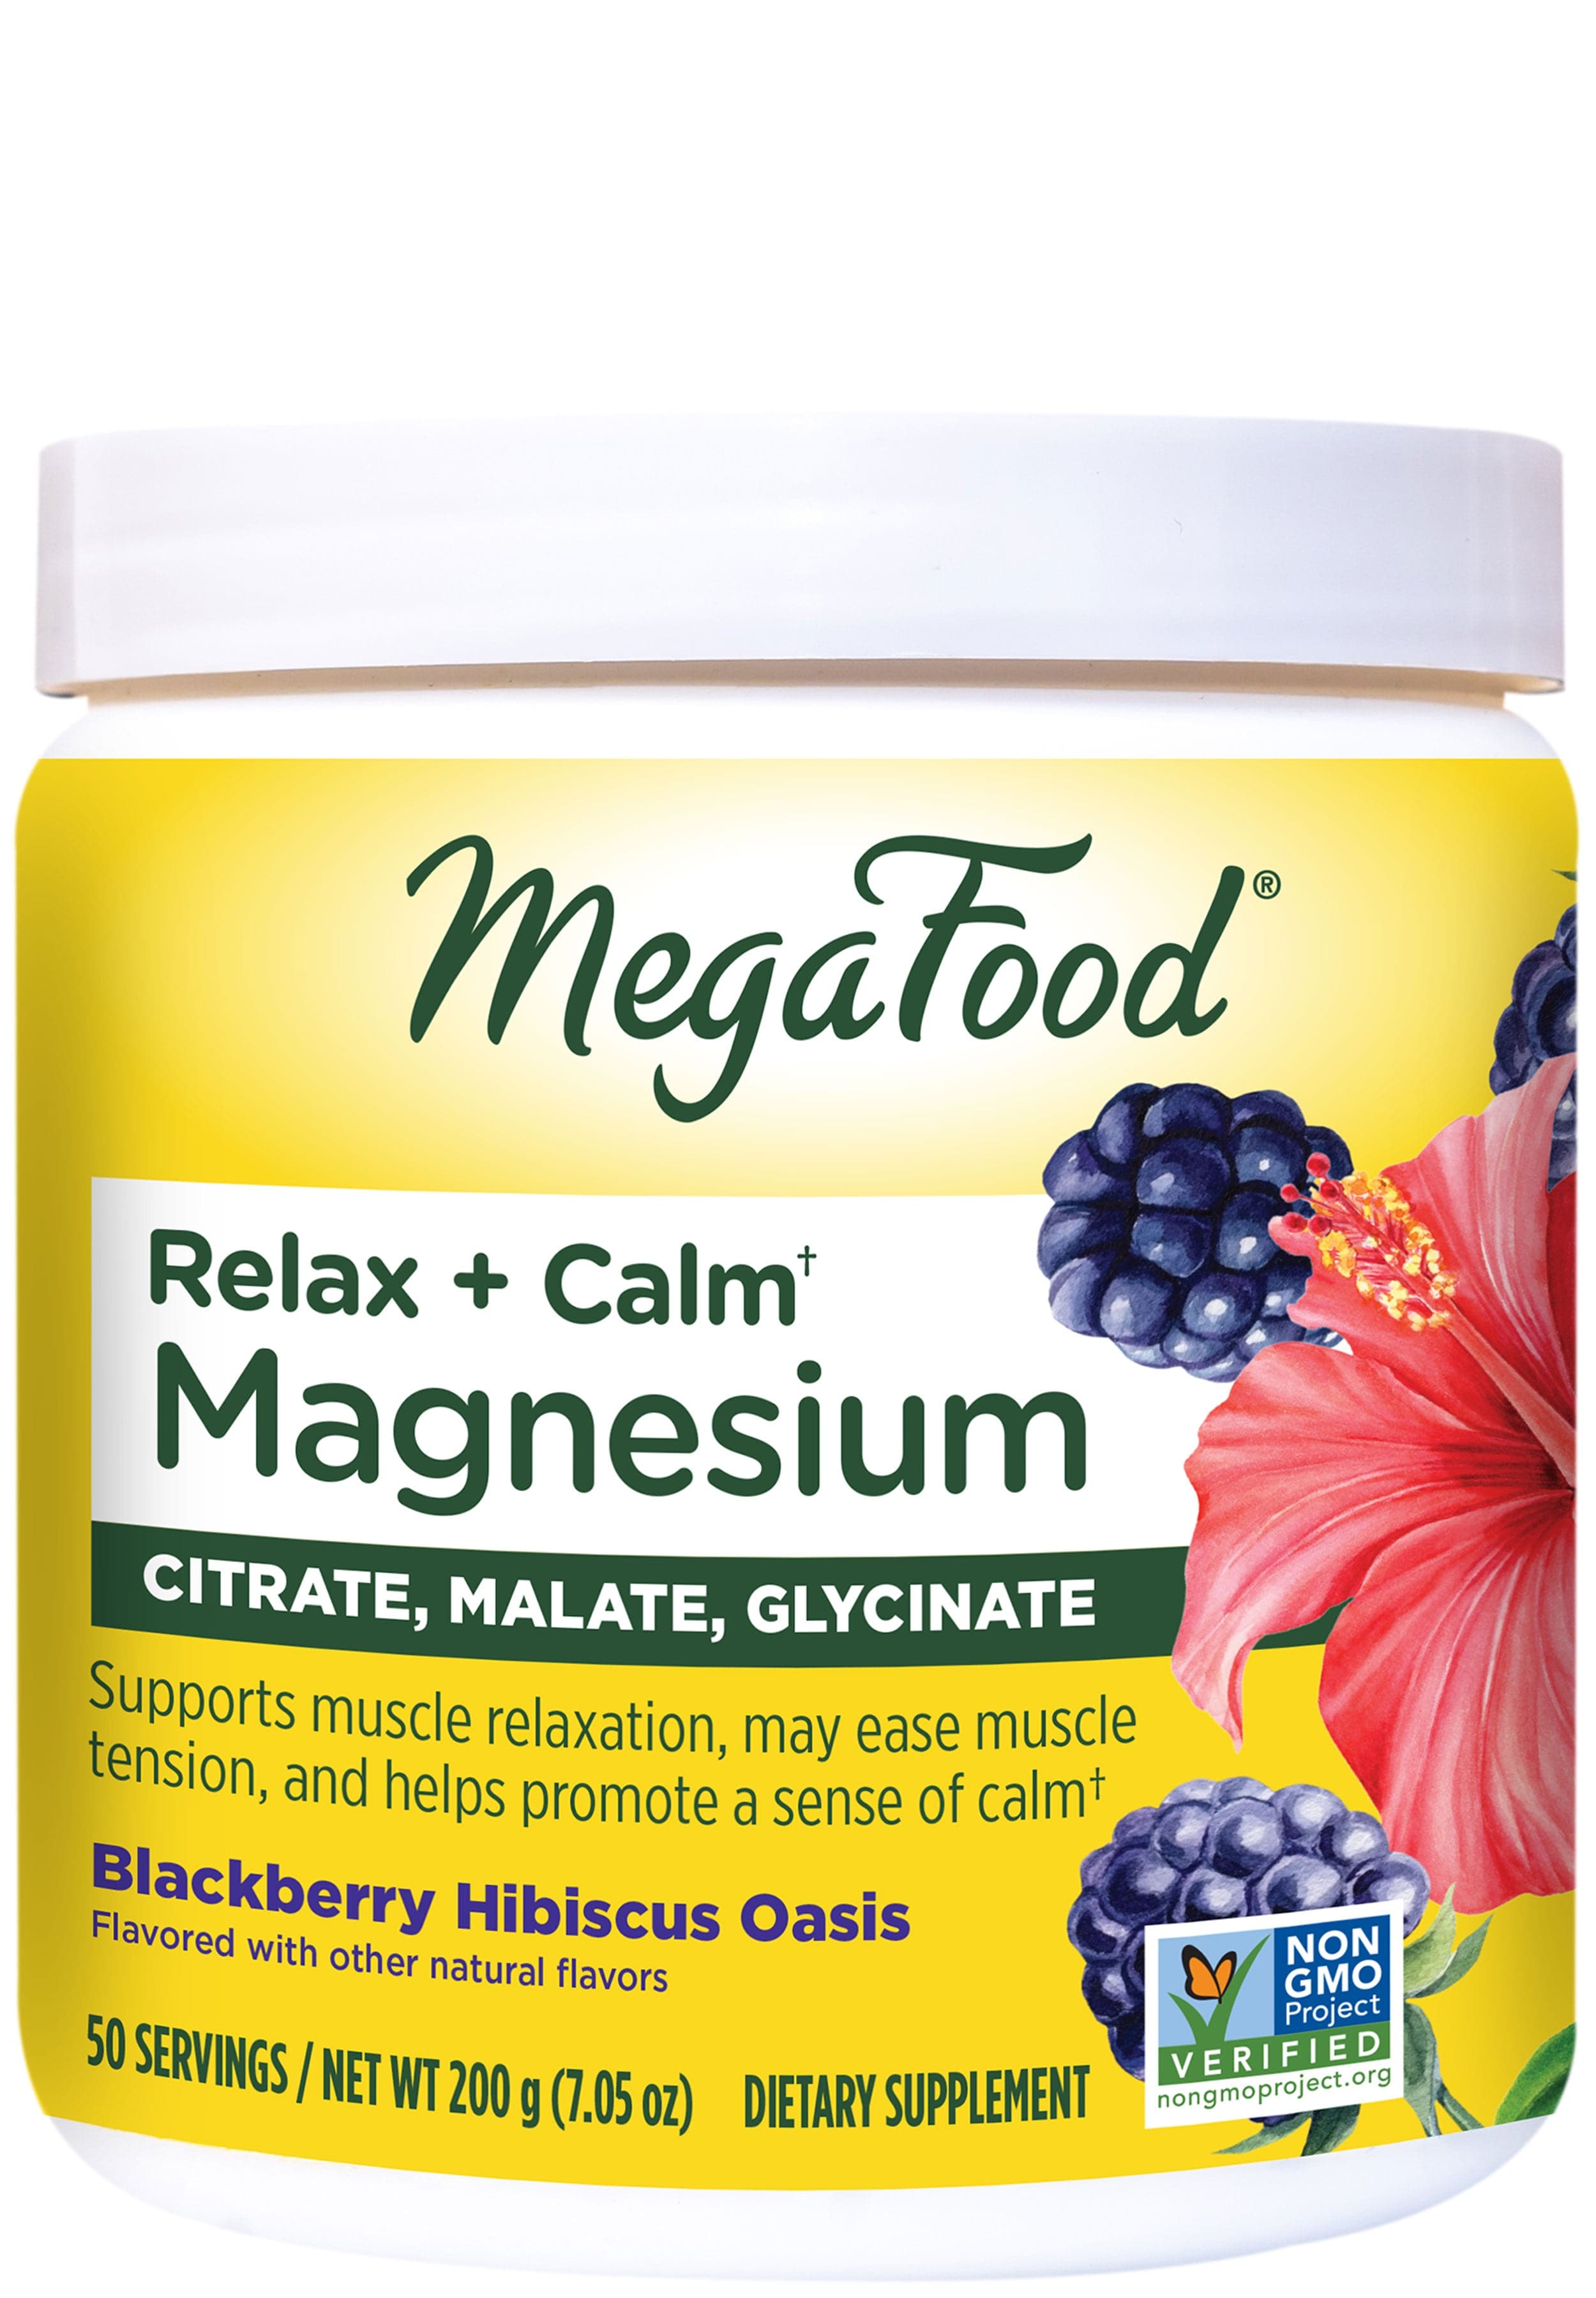 MegaFood Relax + Calm Magnesium Powder - Blackberry Hibiscus Oasis Flavor